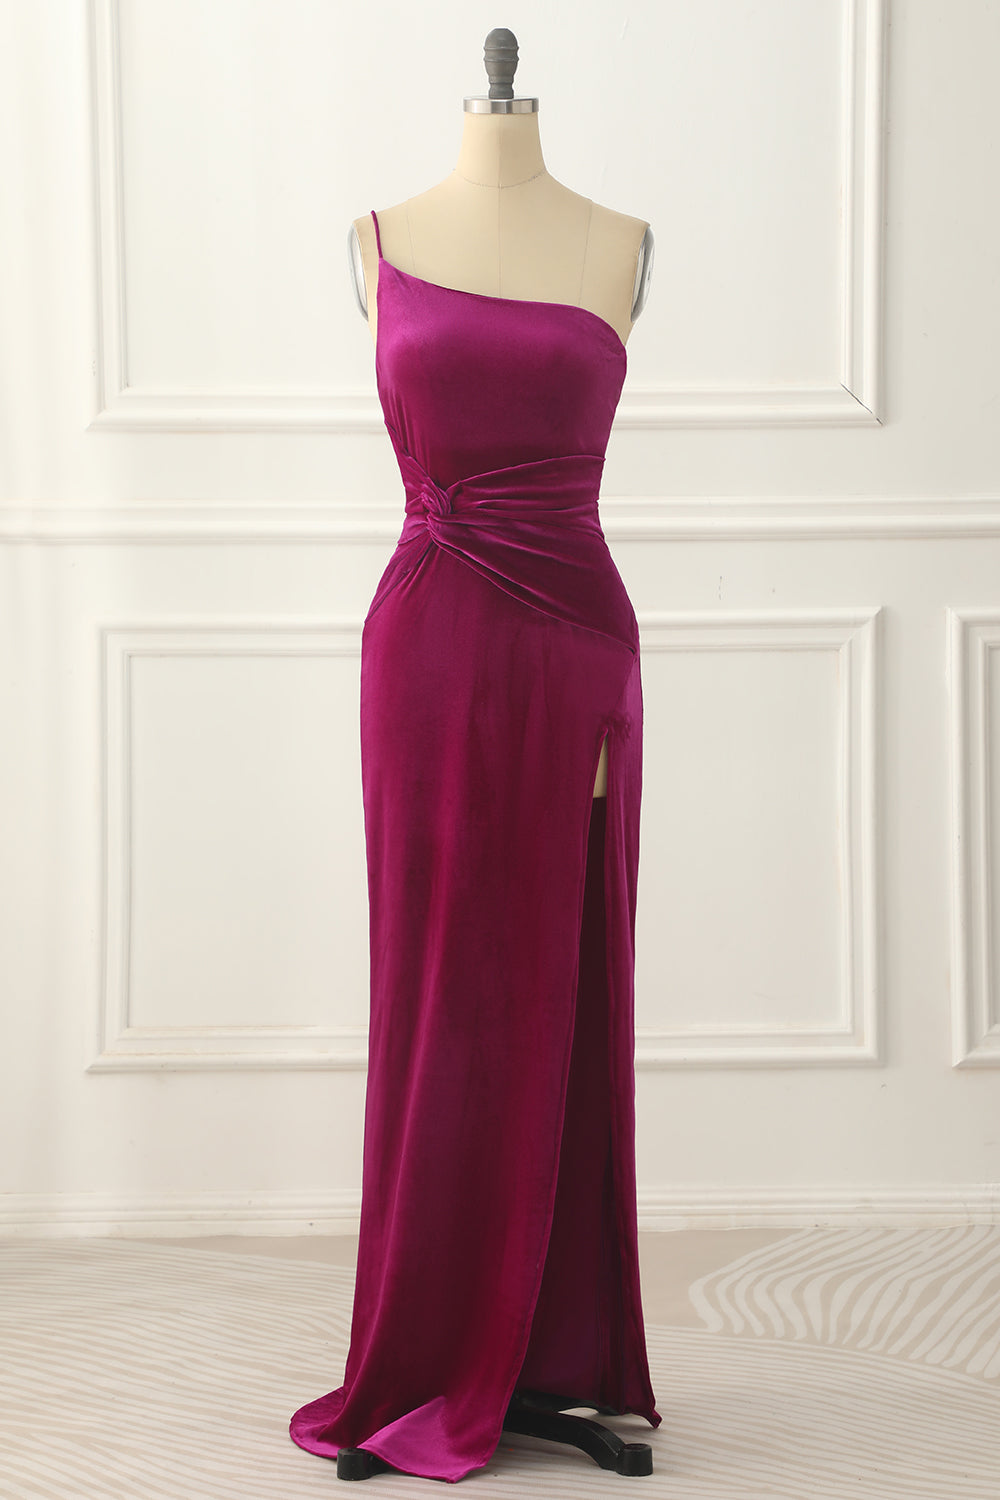 Party Dress Style, Velvet One Shoulder Prom Dress with Slit